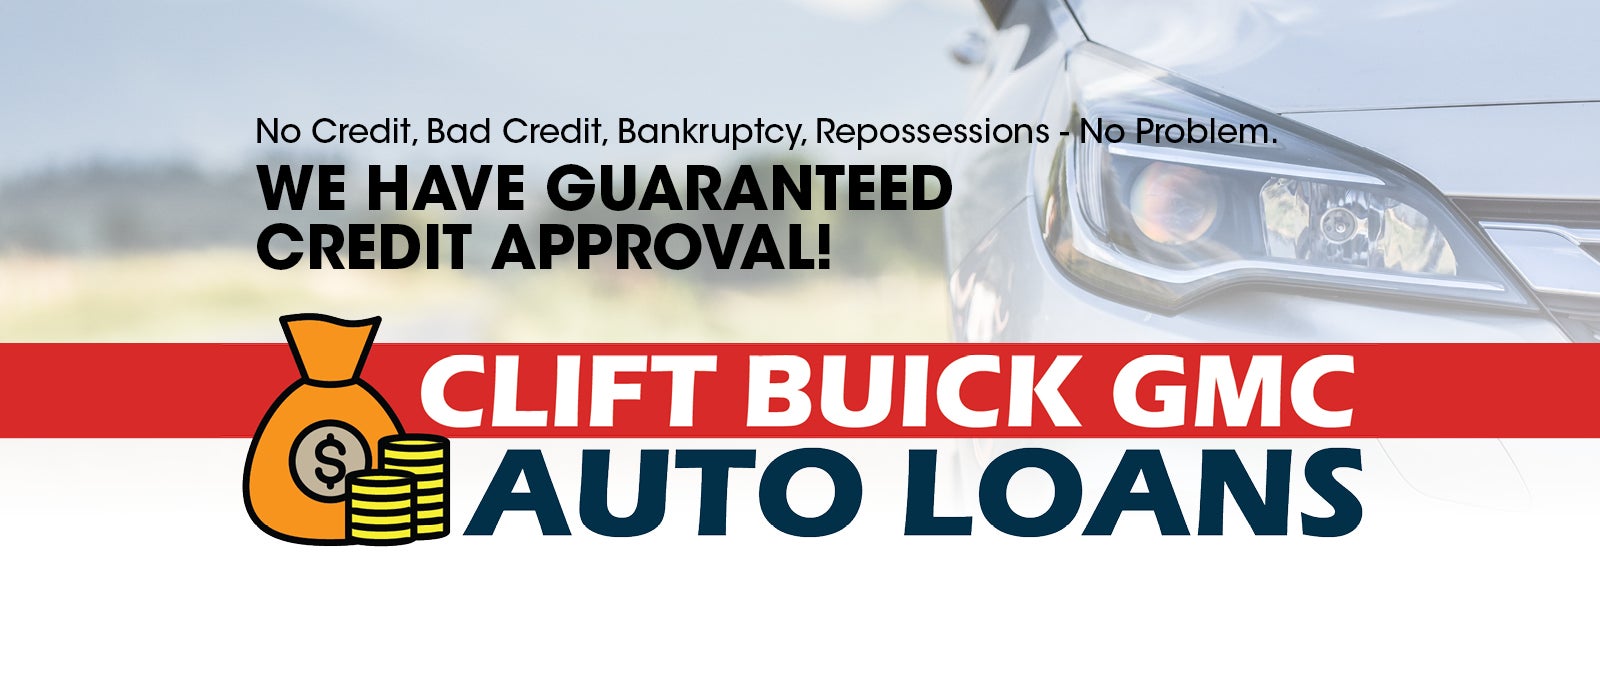 Guaranteed credit approval loans